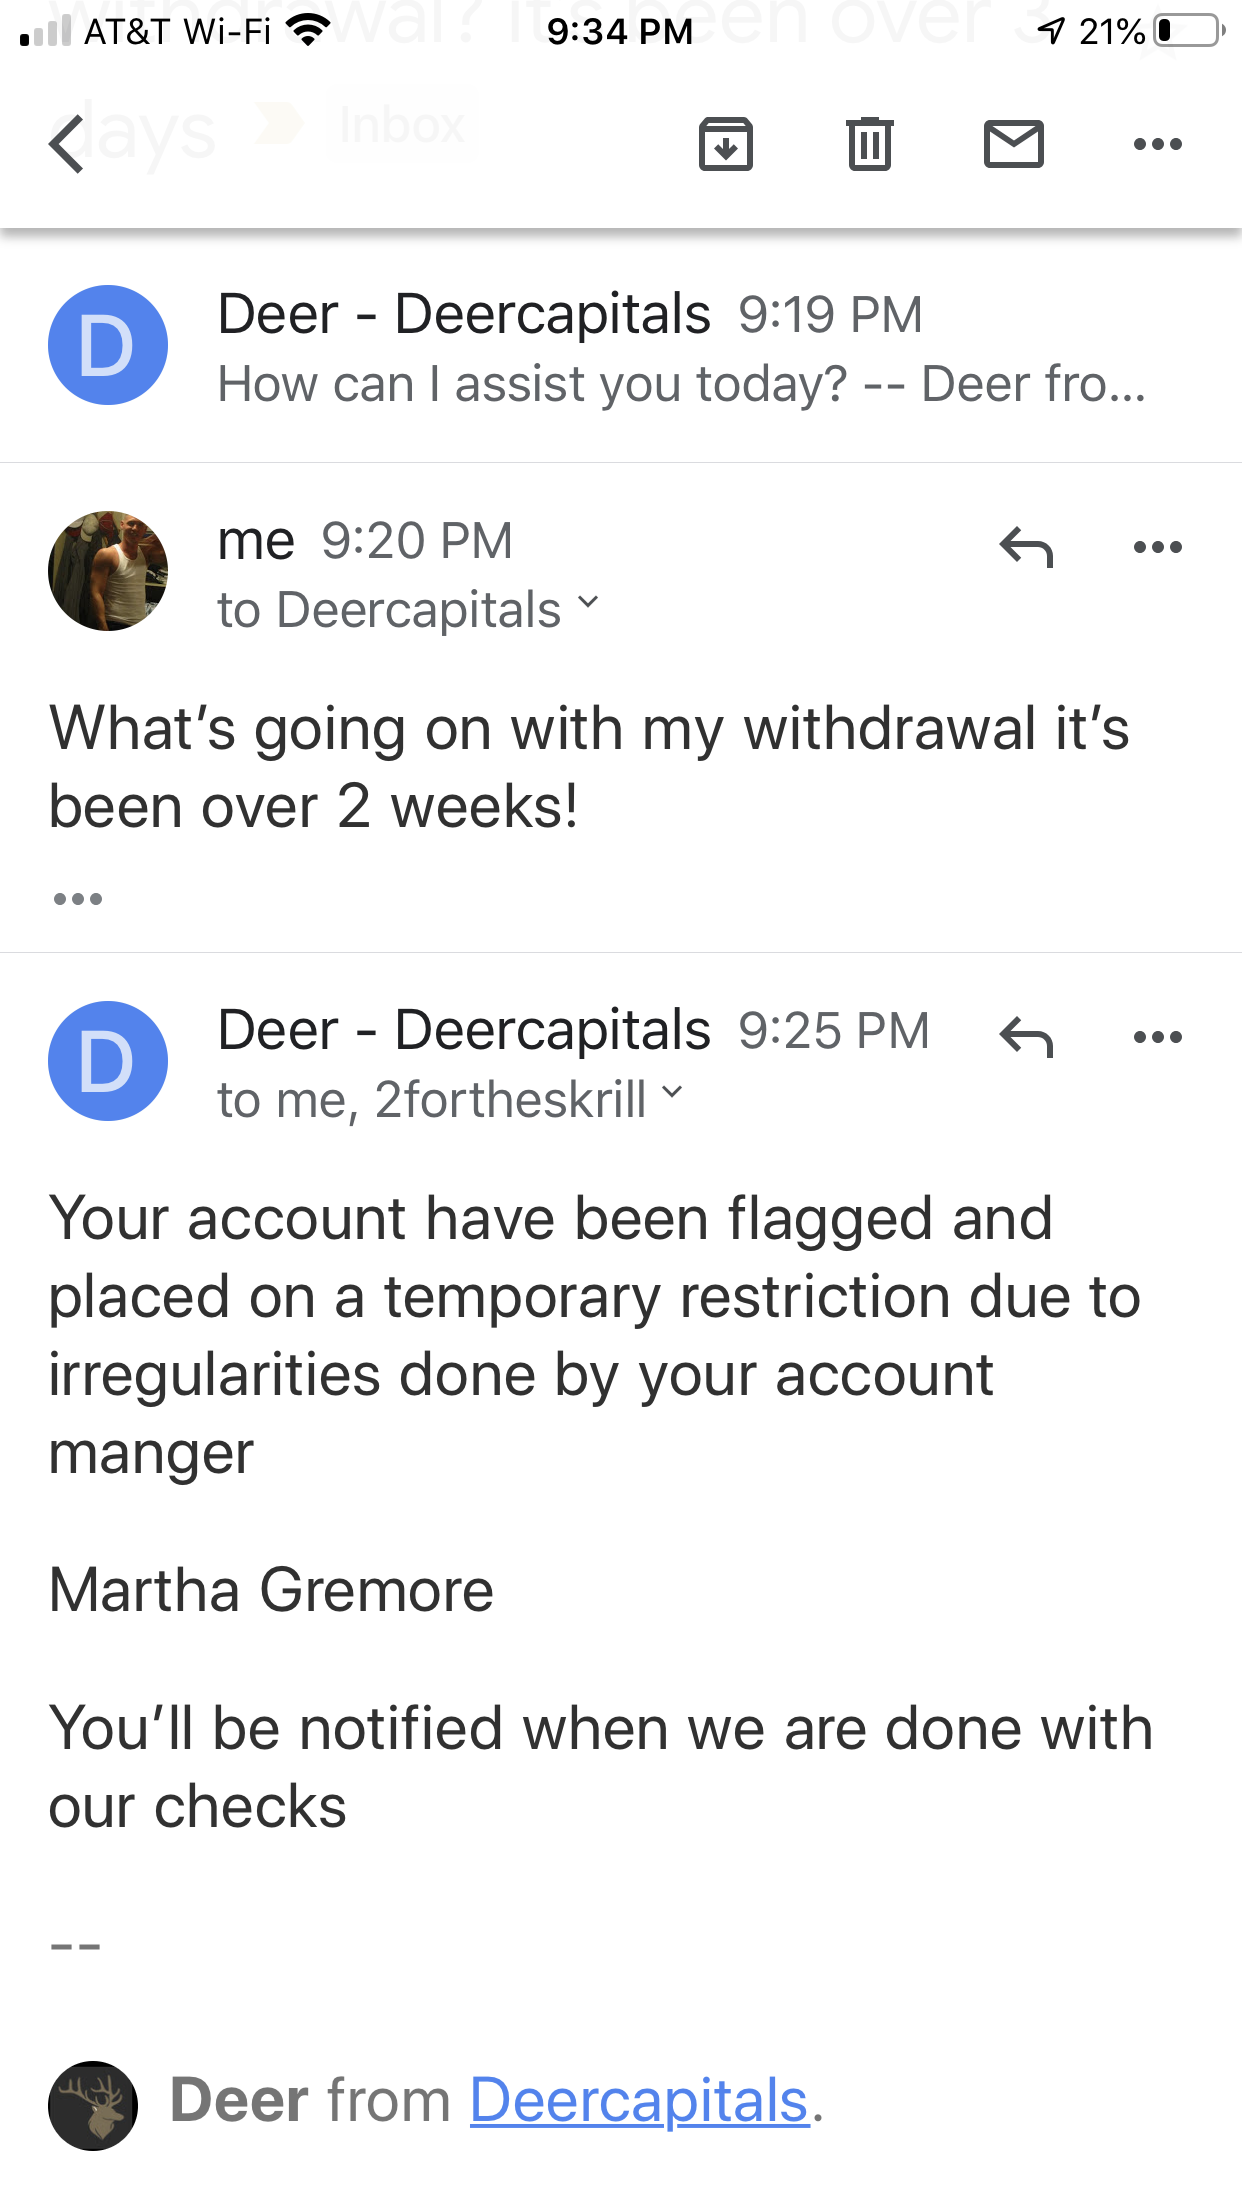 Martha puts account on hold